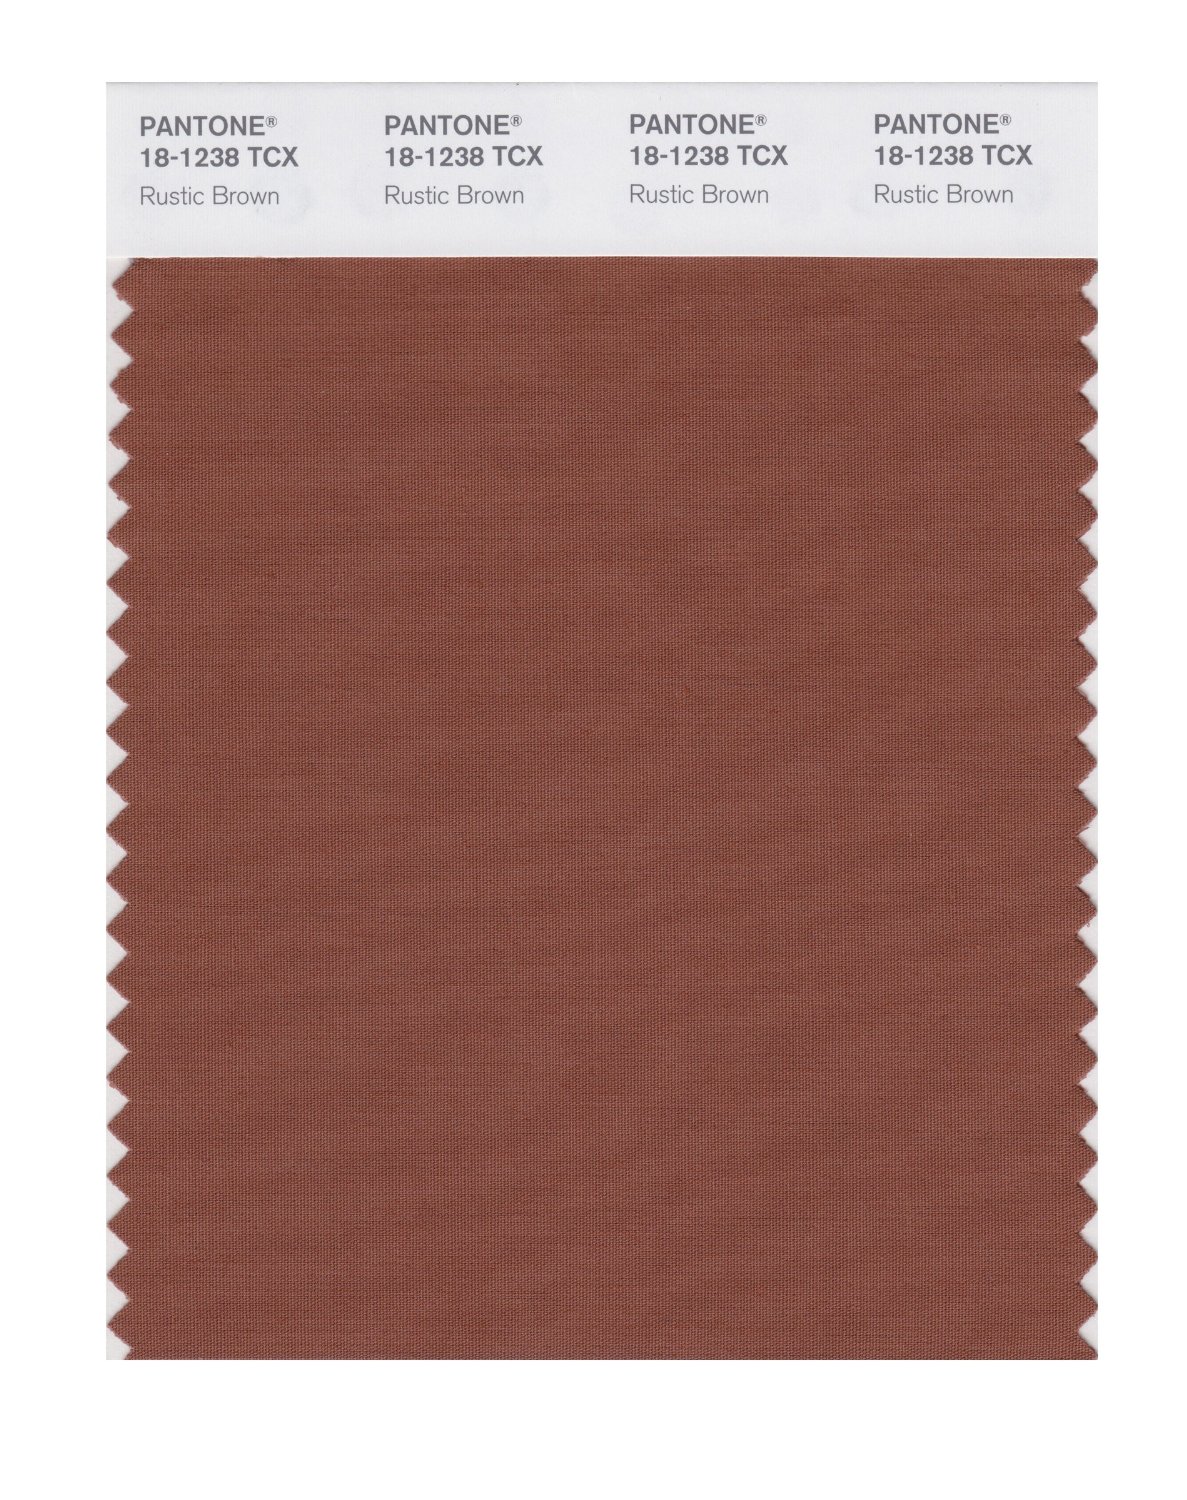 Pantone Cotton Swatch 18-1238 Rustic Brown